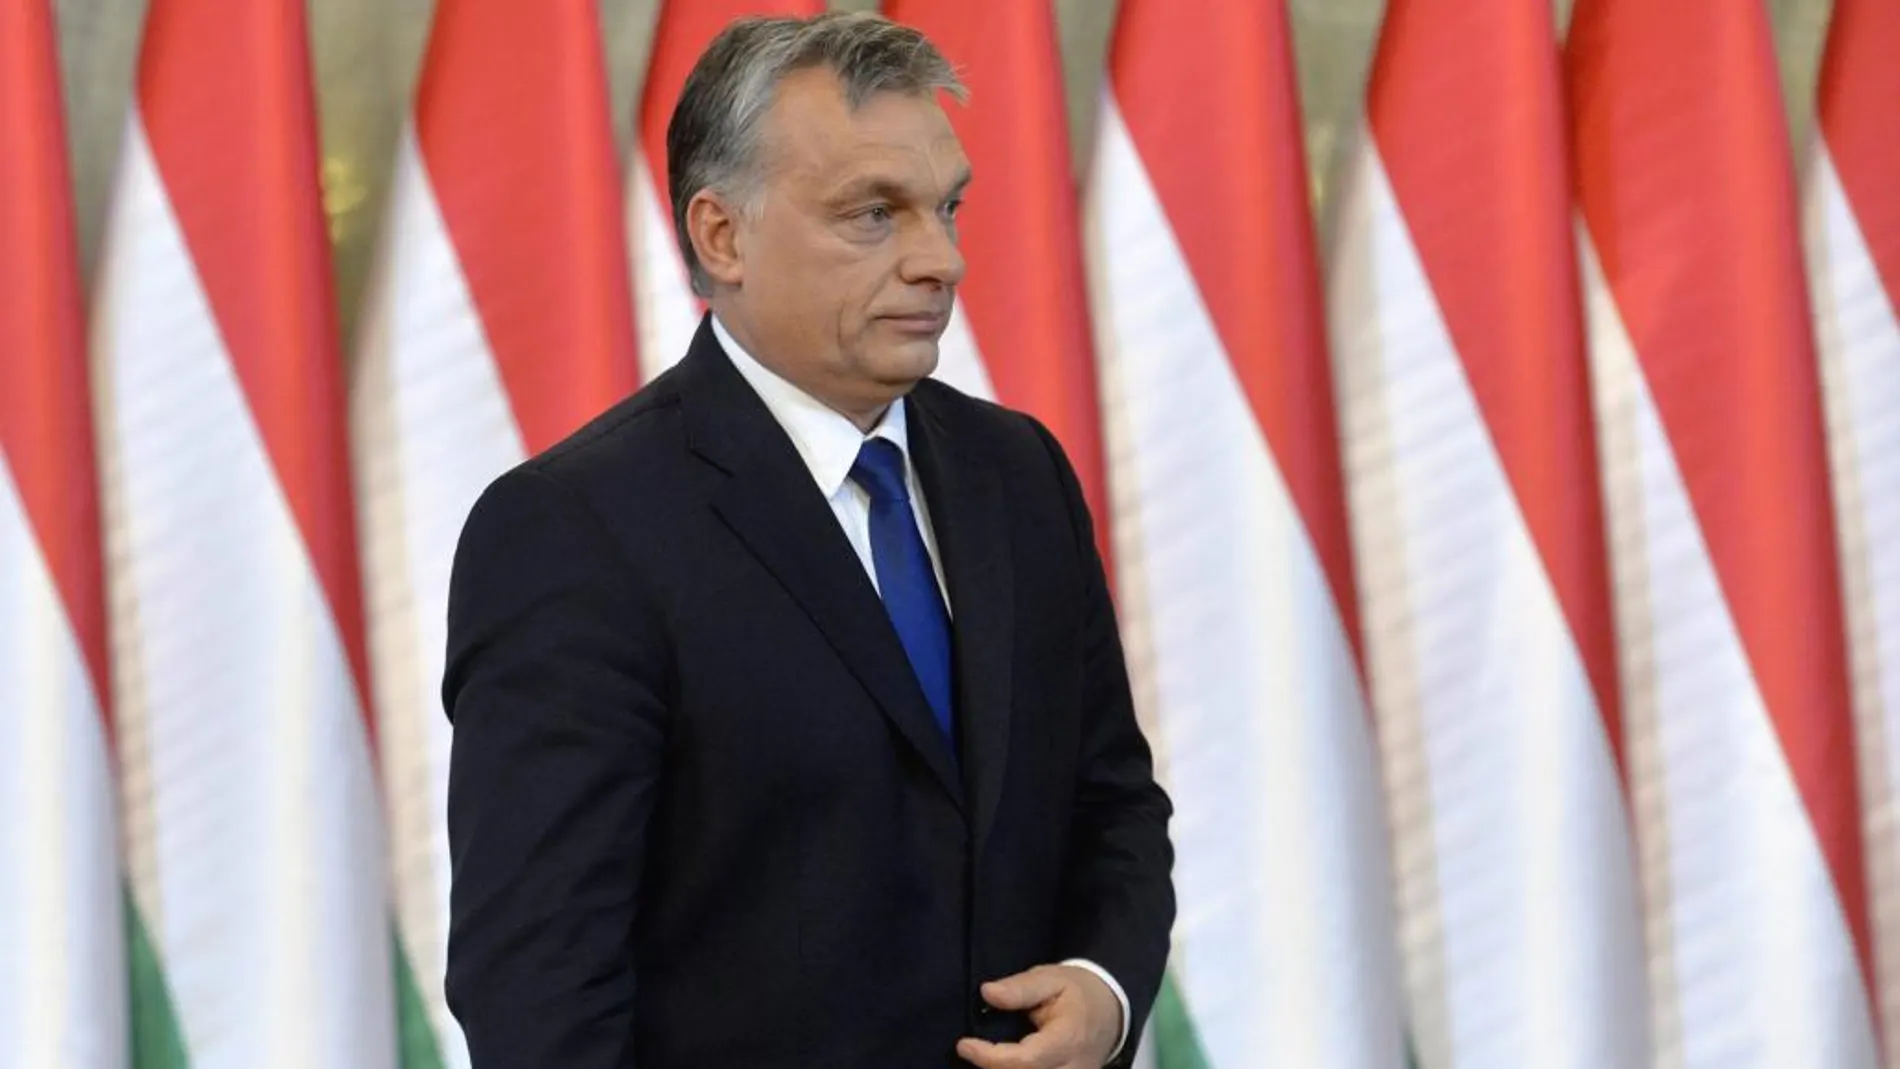 El primer ministro húngaro, Viktor Orban, en rueda de prensa